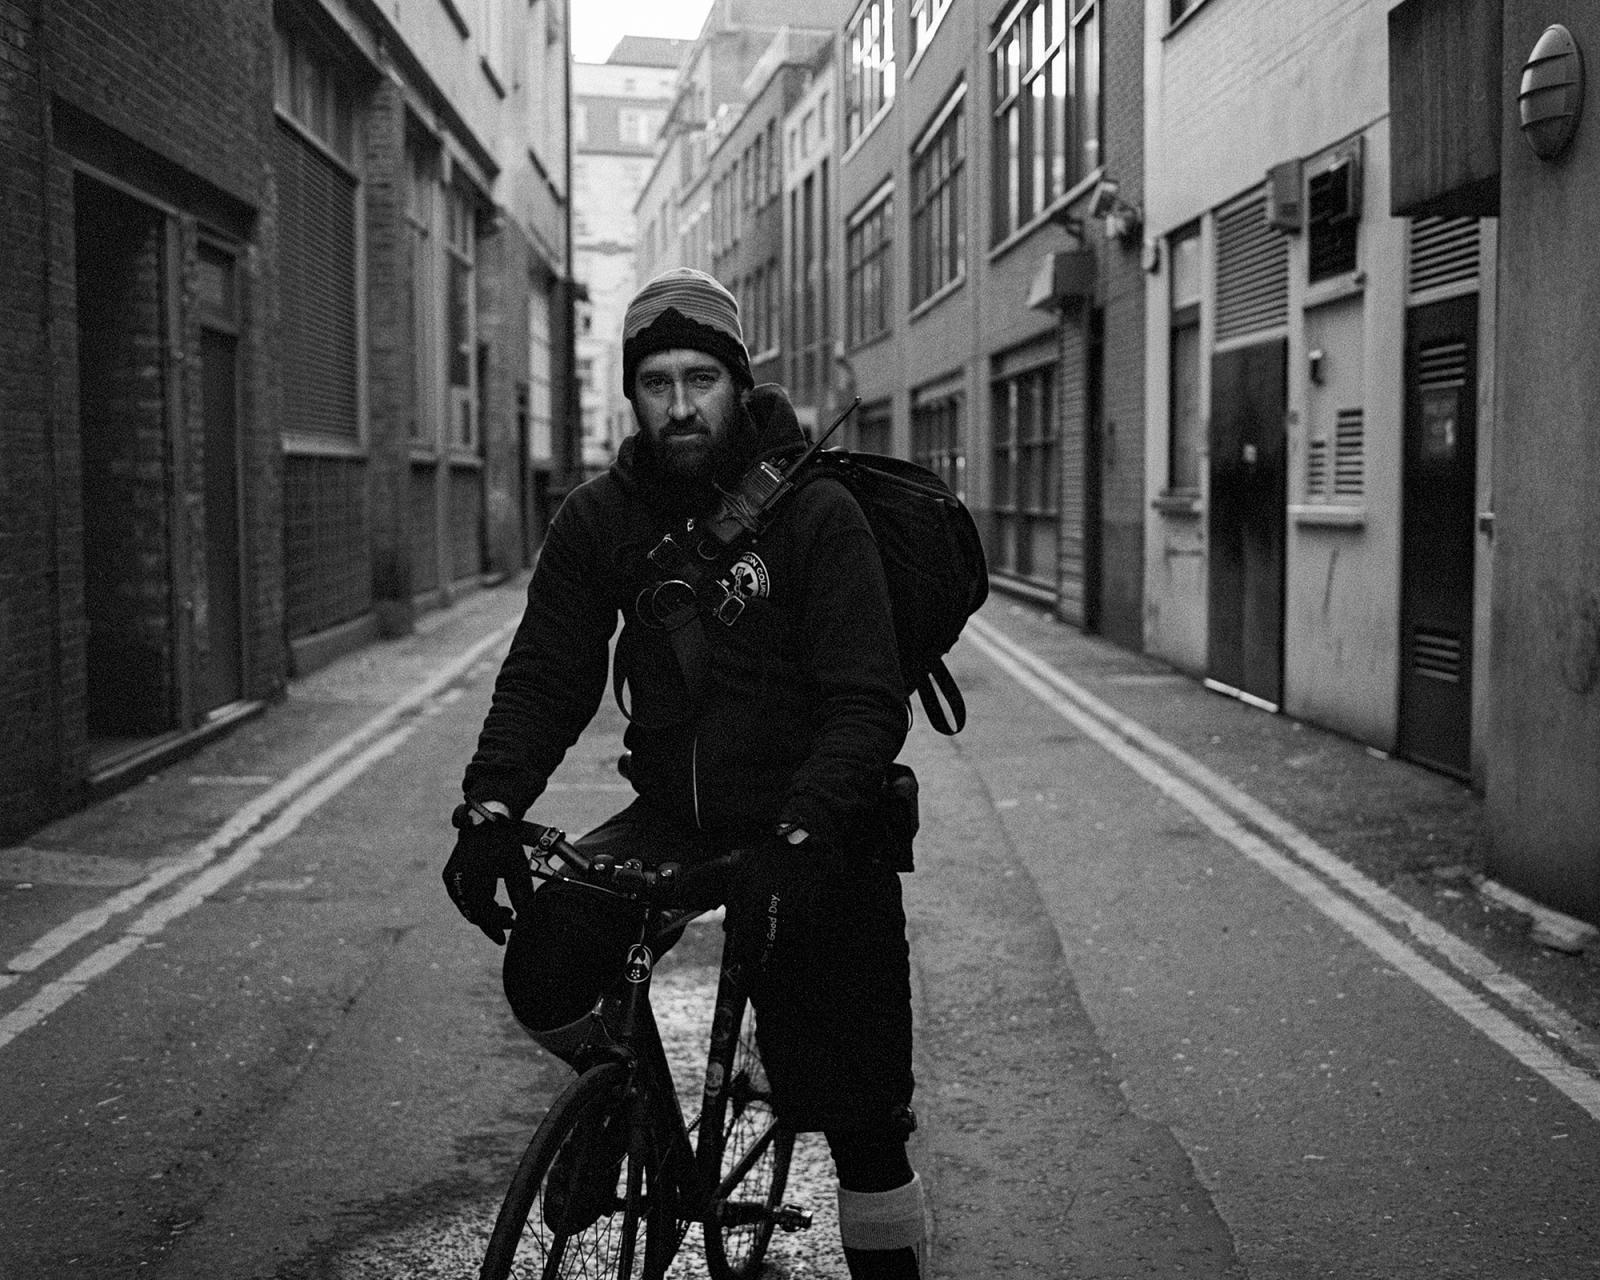 The Circuit. London Bicycle Messengers 2009-2015 - Darren, Soho, 2011